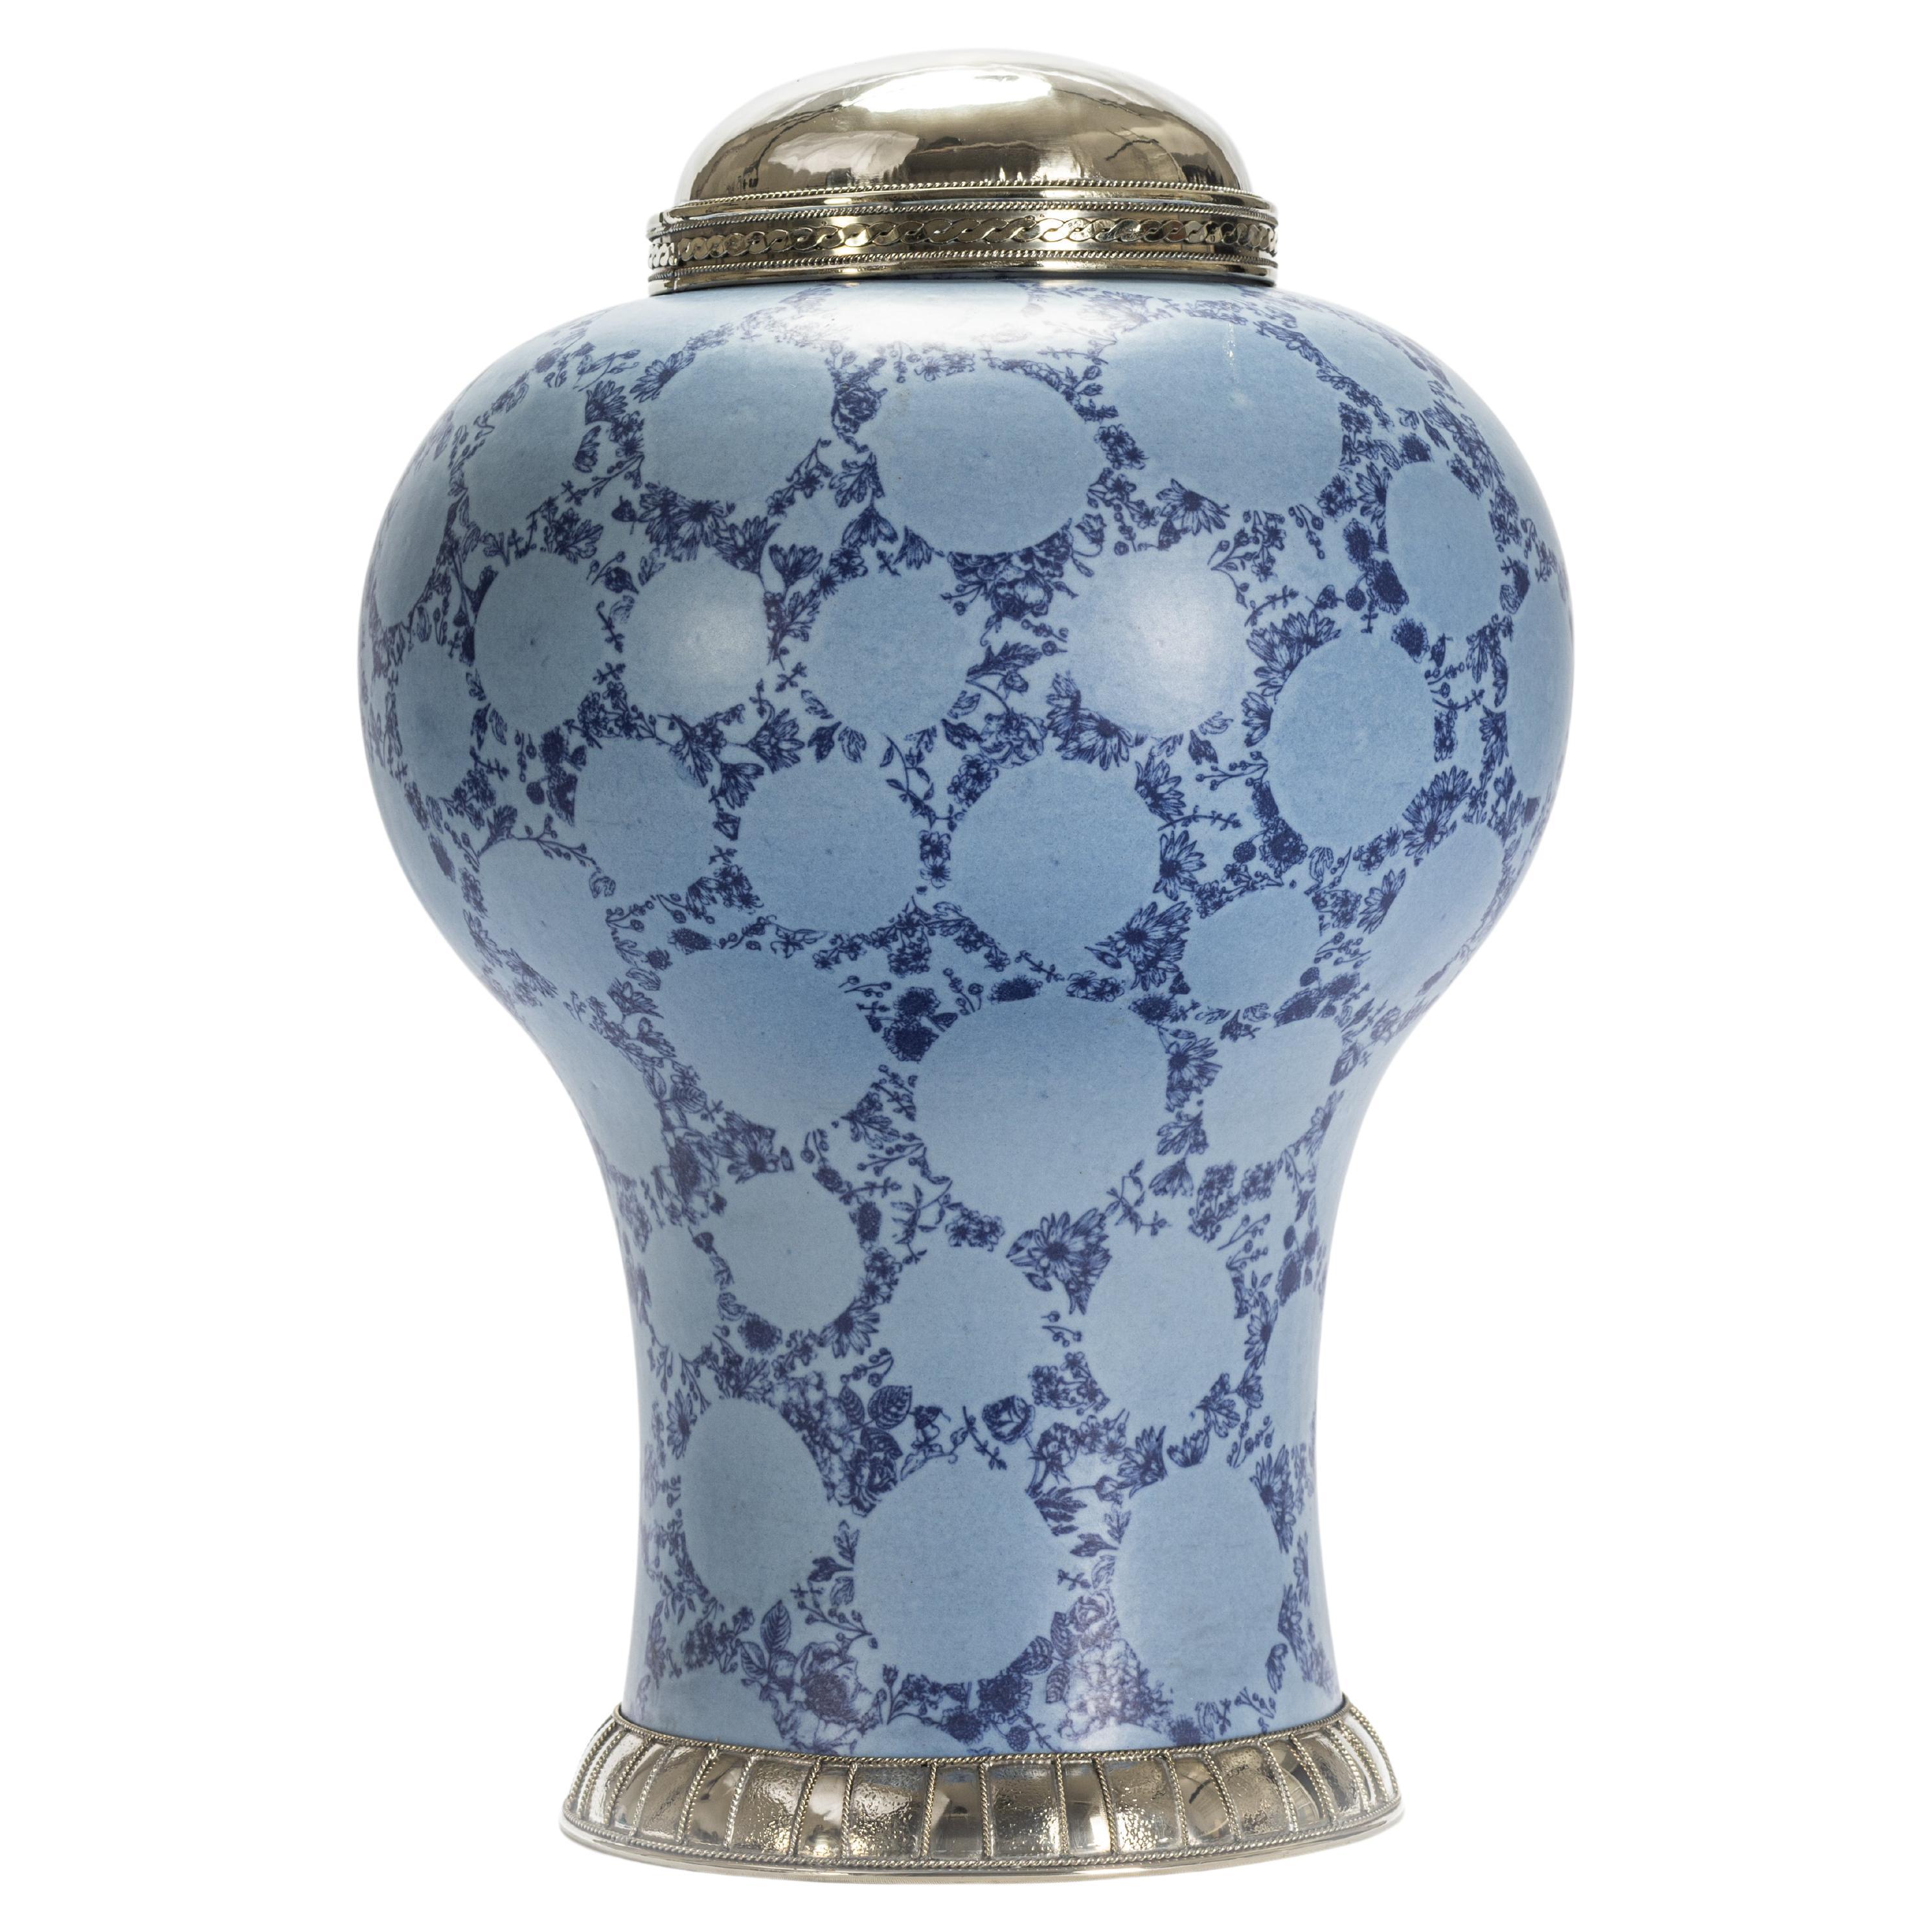 Blue Jar by Estudio Guerrero, Glazed Ceramic and White Metal